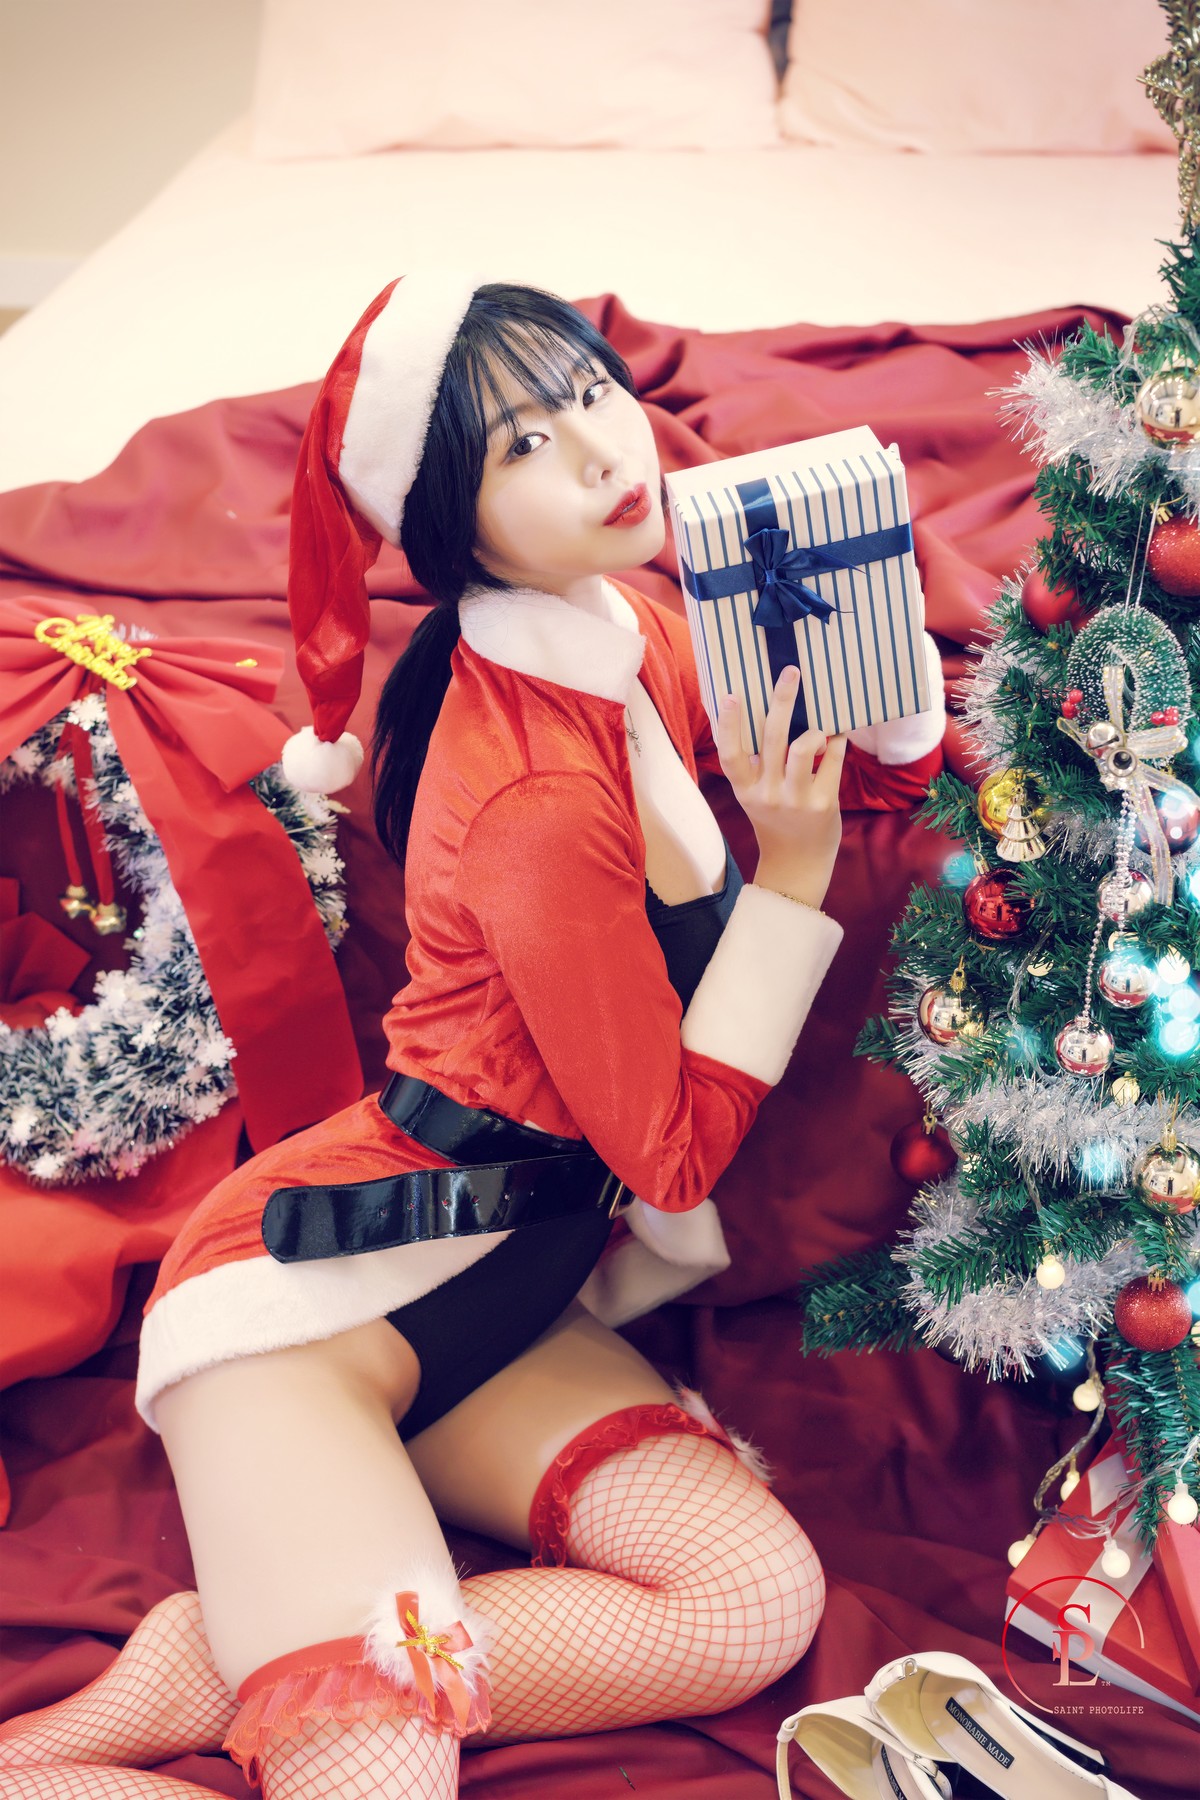 Yuna 유나, [SAINT Photolife] Merry Yuna’s Xmas Set.01